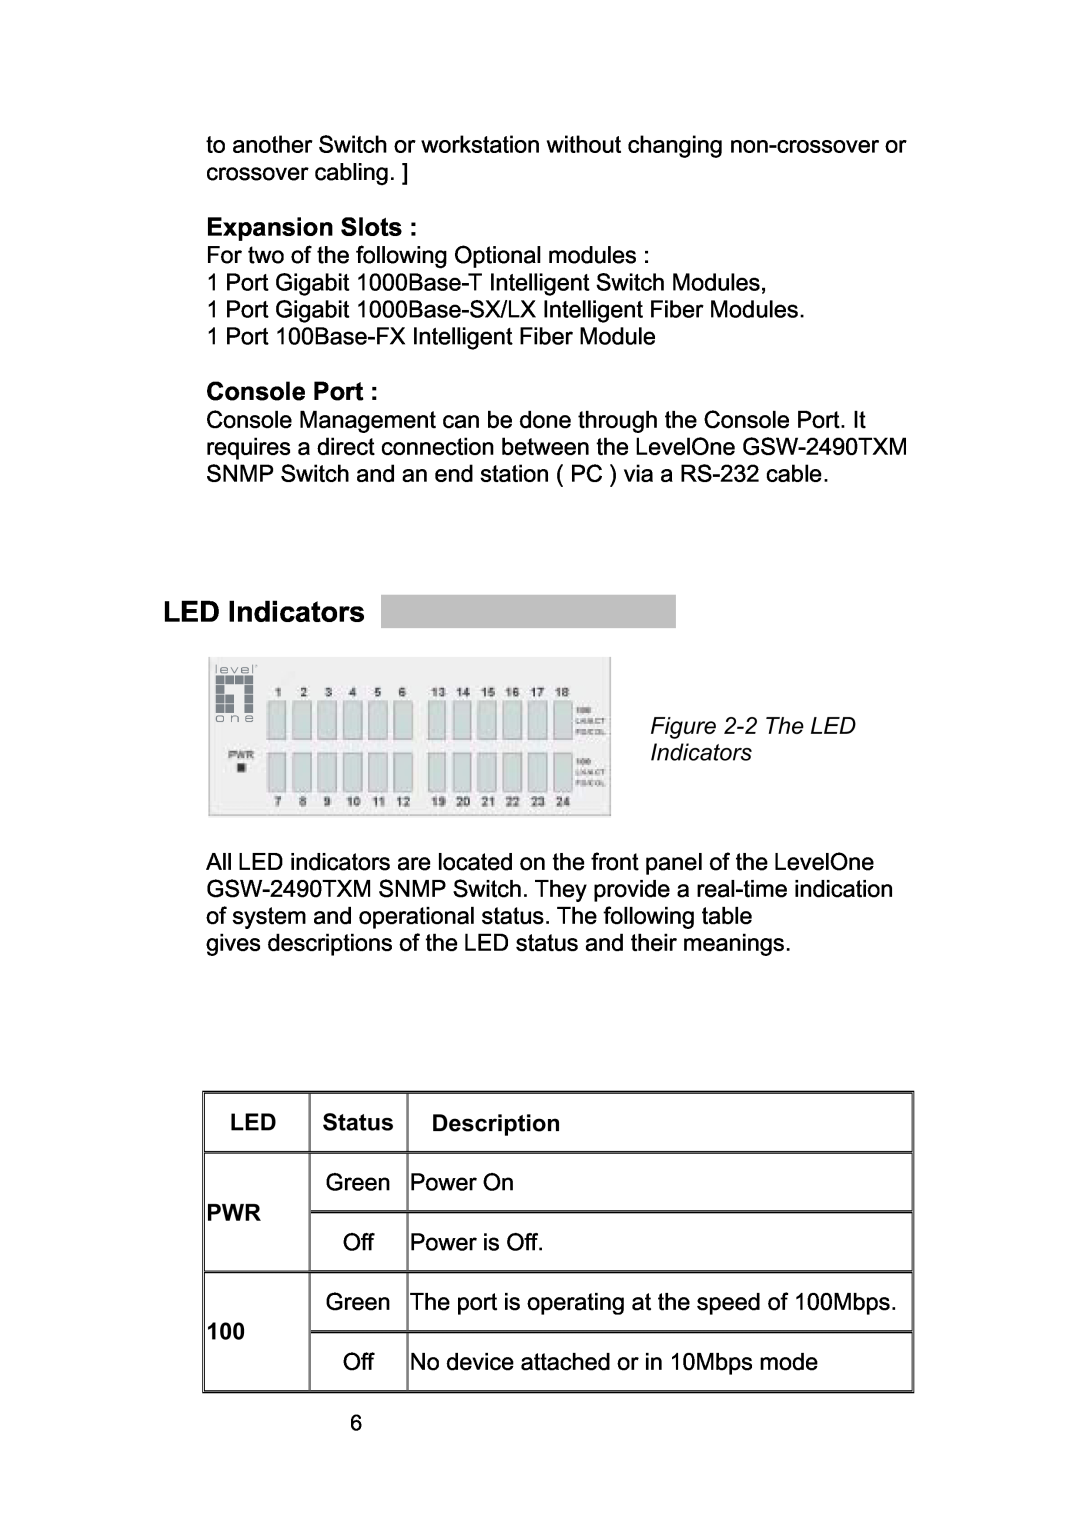 LevelOne GSW-2490TXM manual Expansion Slots, Console Port, 2 The LED Indicators 